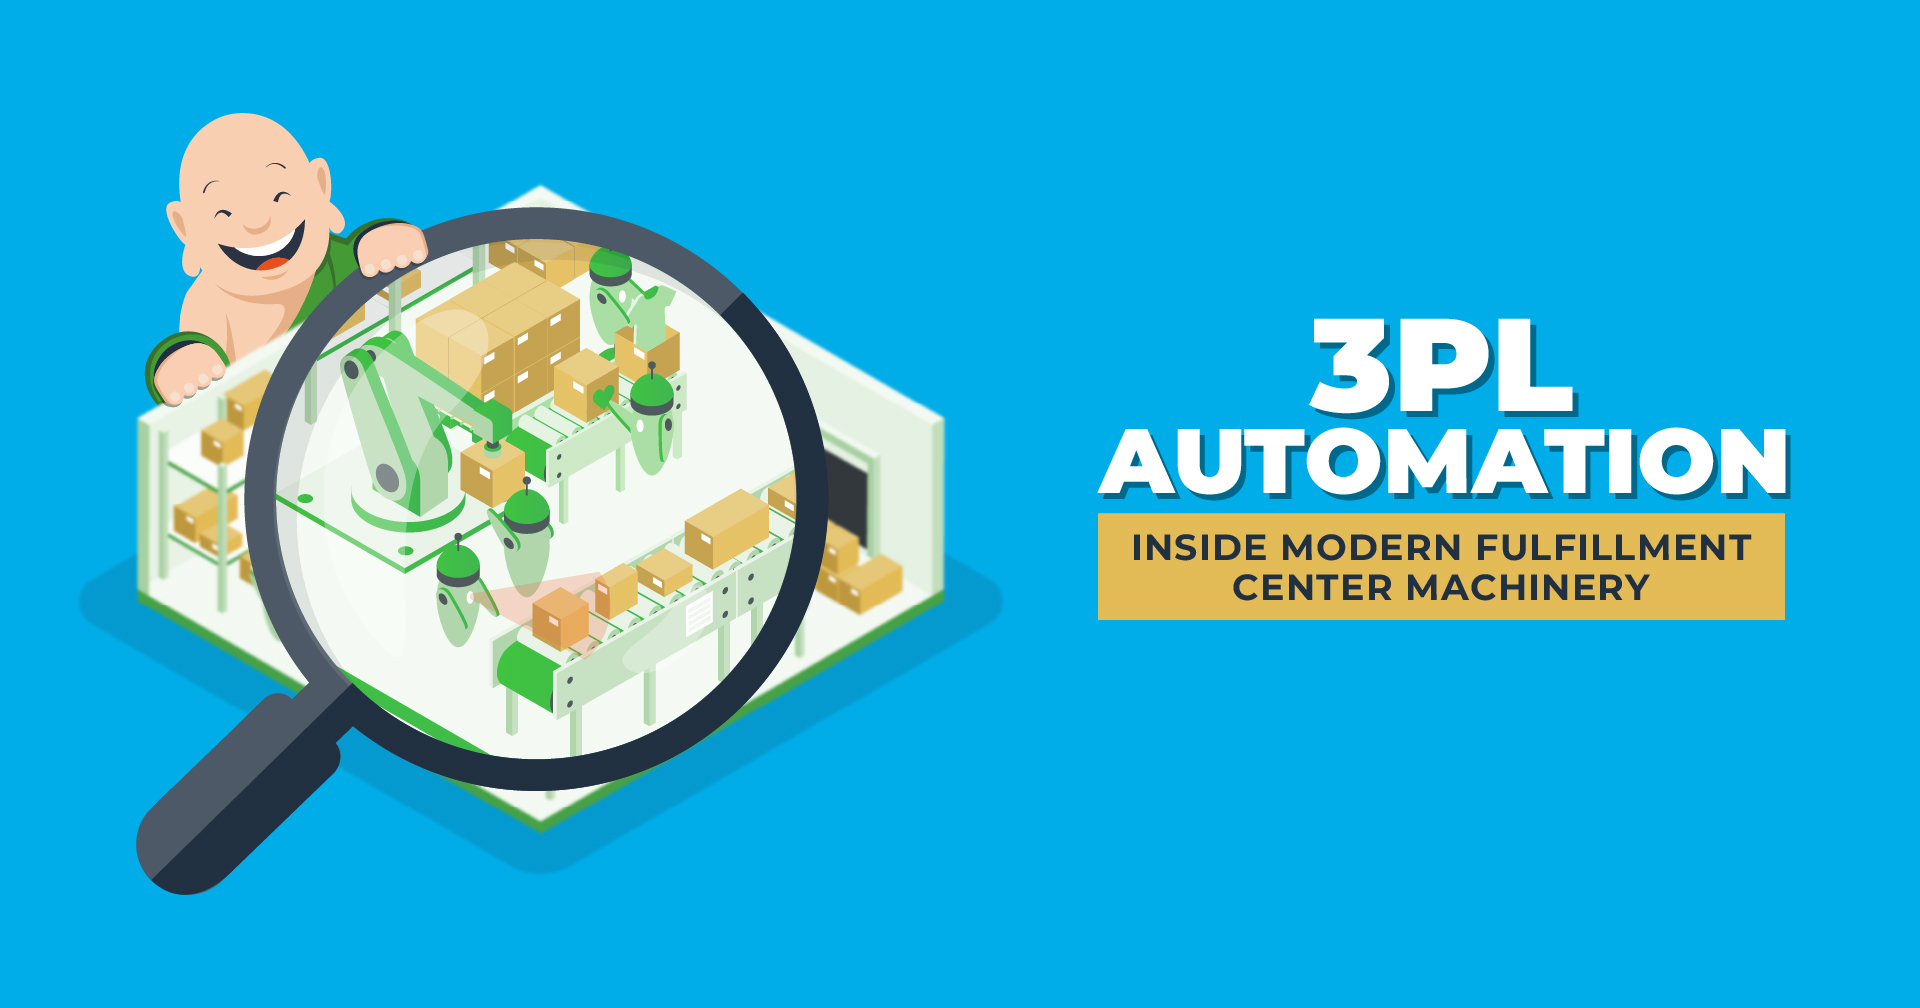 3PL Automation: Inside Modern Fulfillment Center Machinery